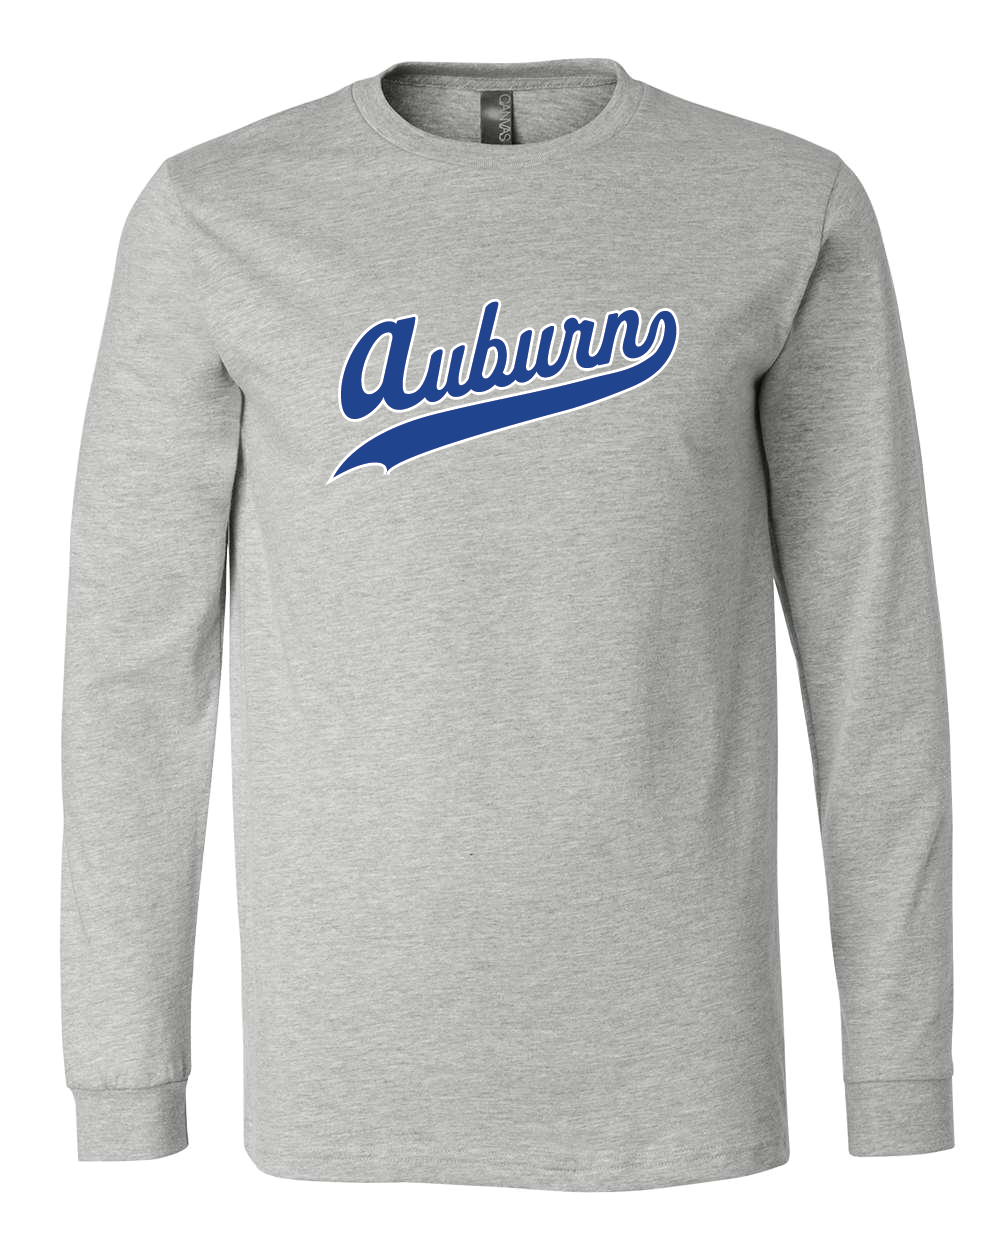 Long Sleeve T-shirt - Auburn Script